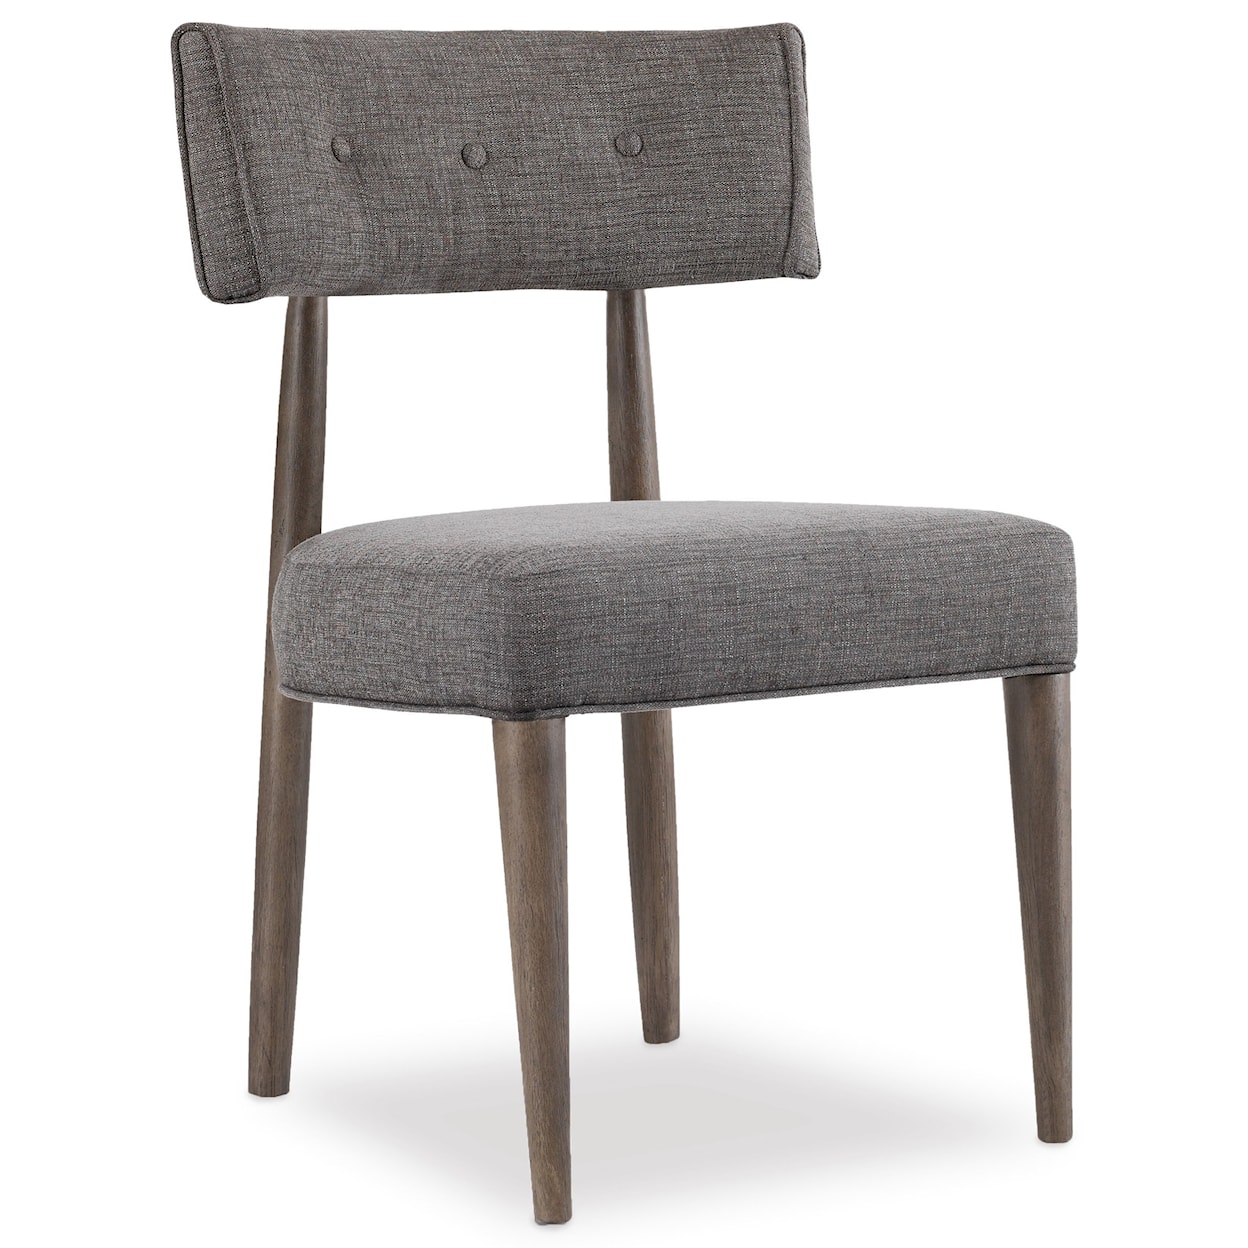 Hooker Furniture Curata Modern Upholstered Chair